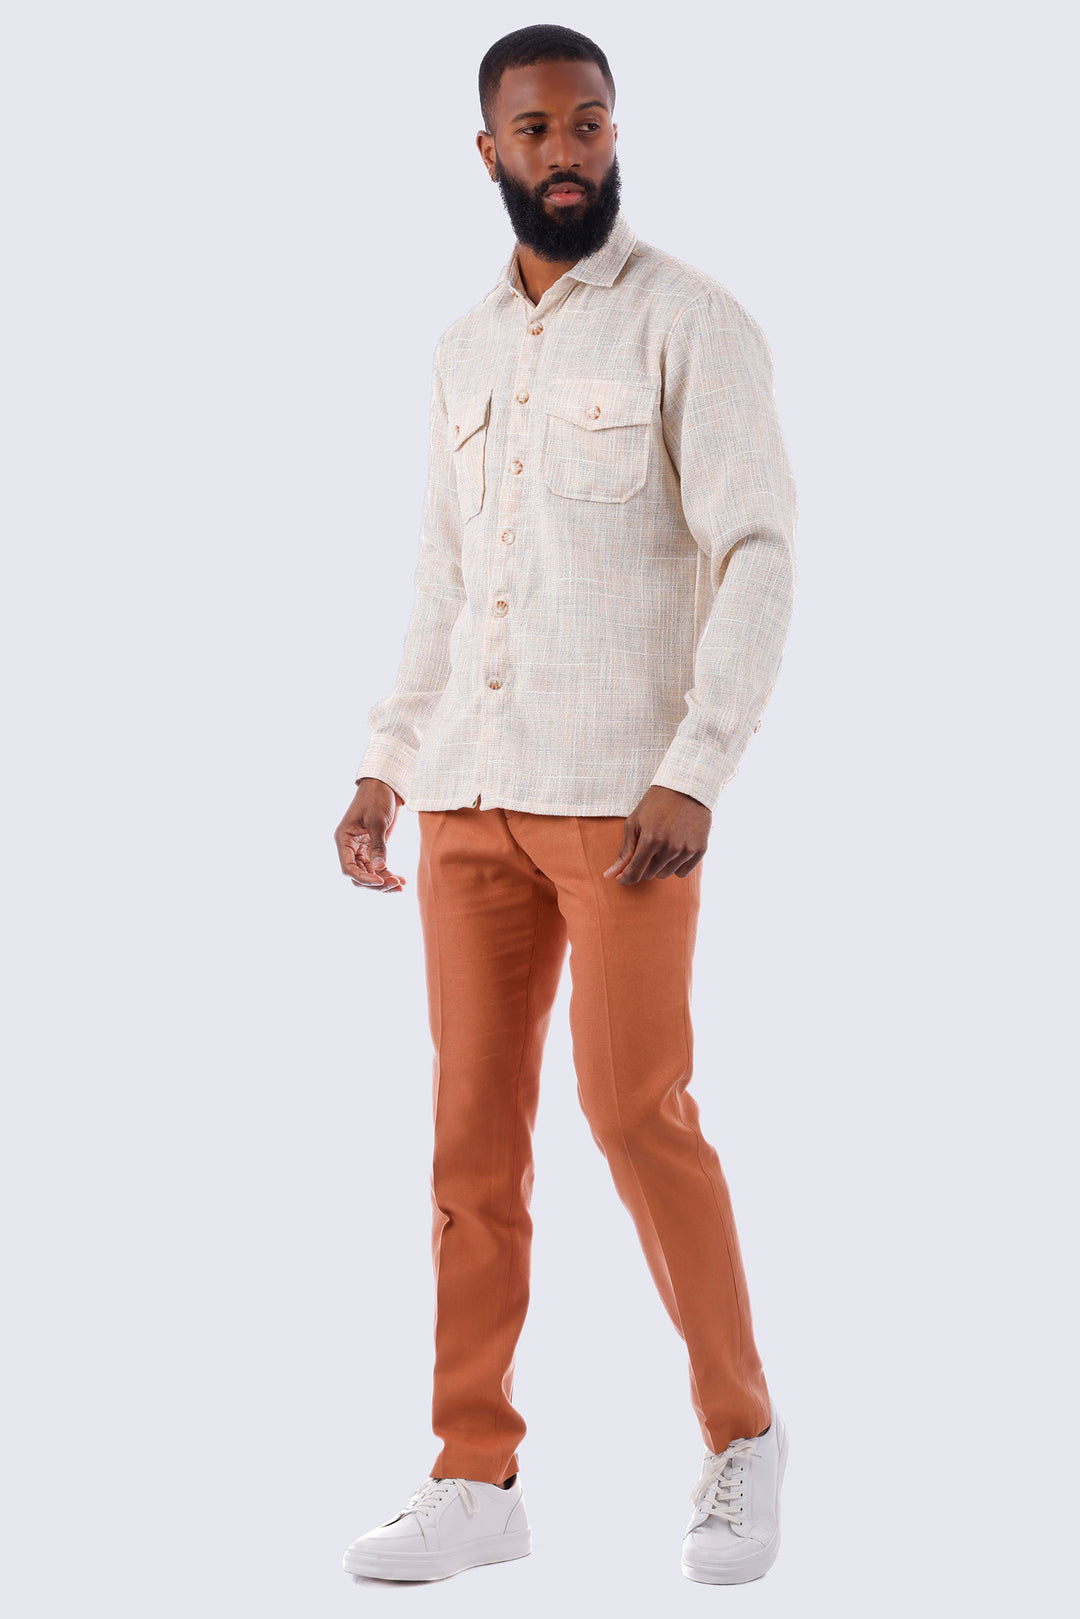 Barabas Men's Stretchy See-through Wool Long Sleeve Shirts 4B72 Cream